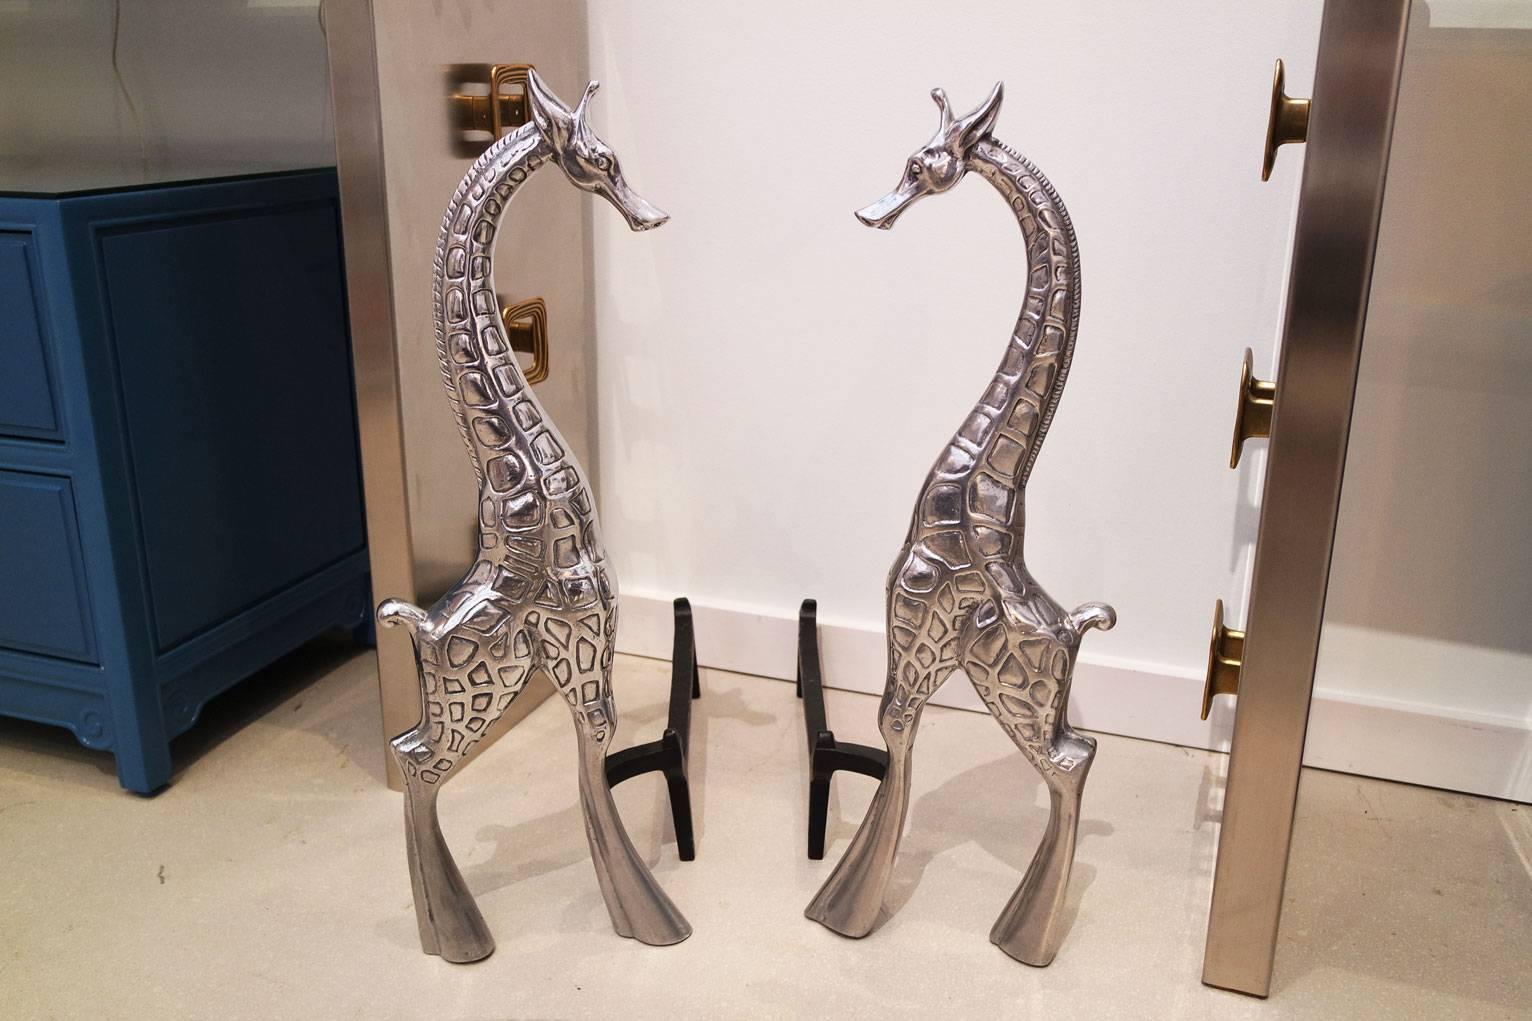 Pair of aluminium Arthur Court giraffe andirons.
Measures: 26.5" H x 9.25" W x 18.25" D.